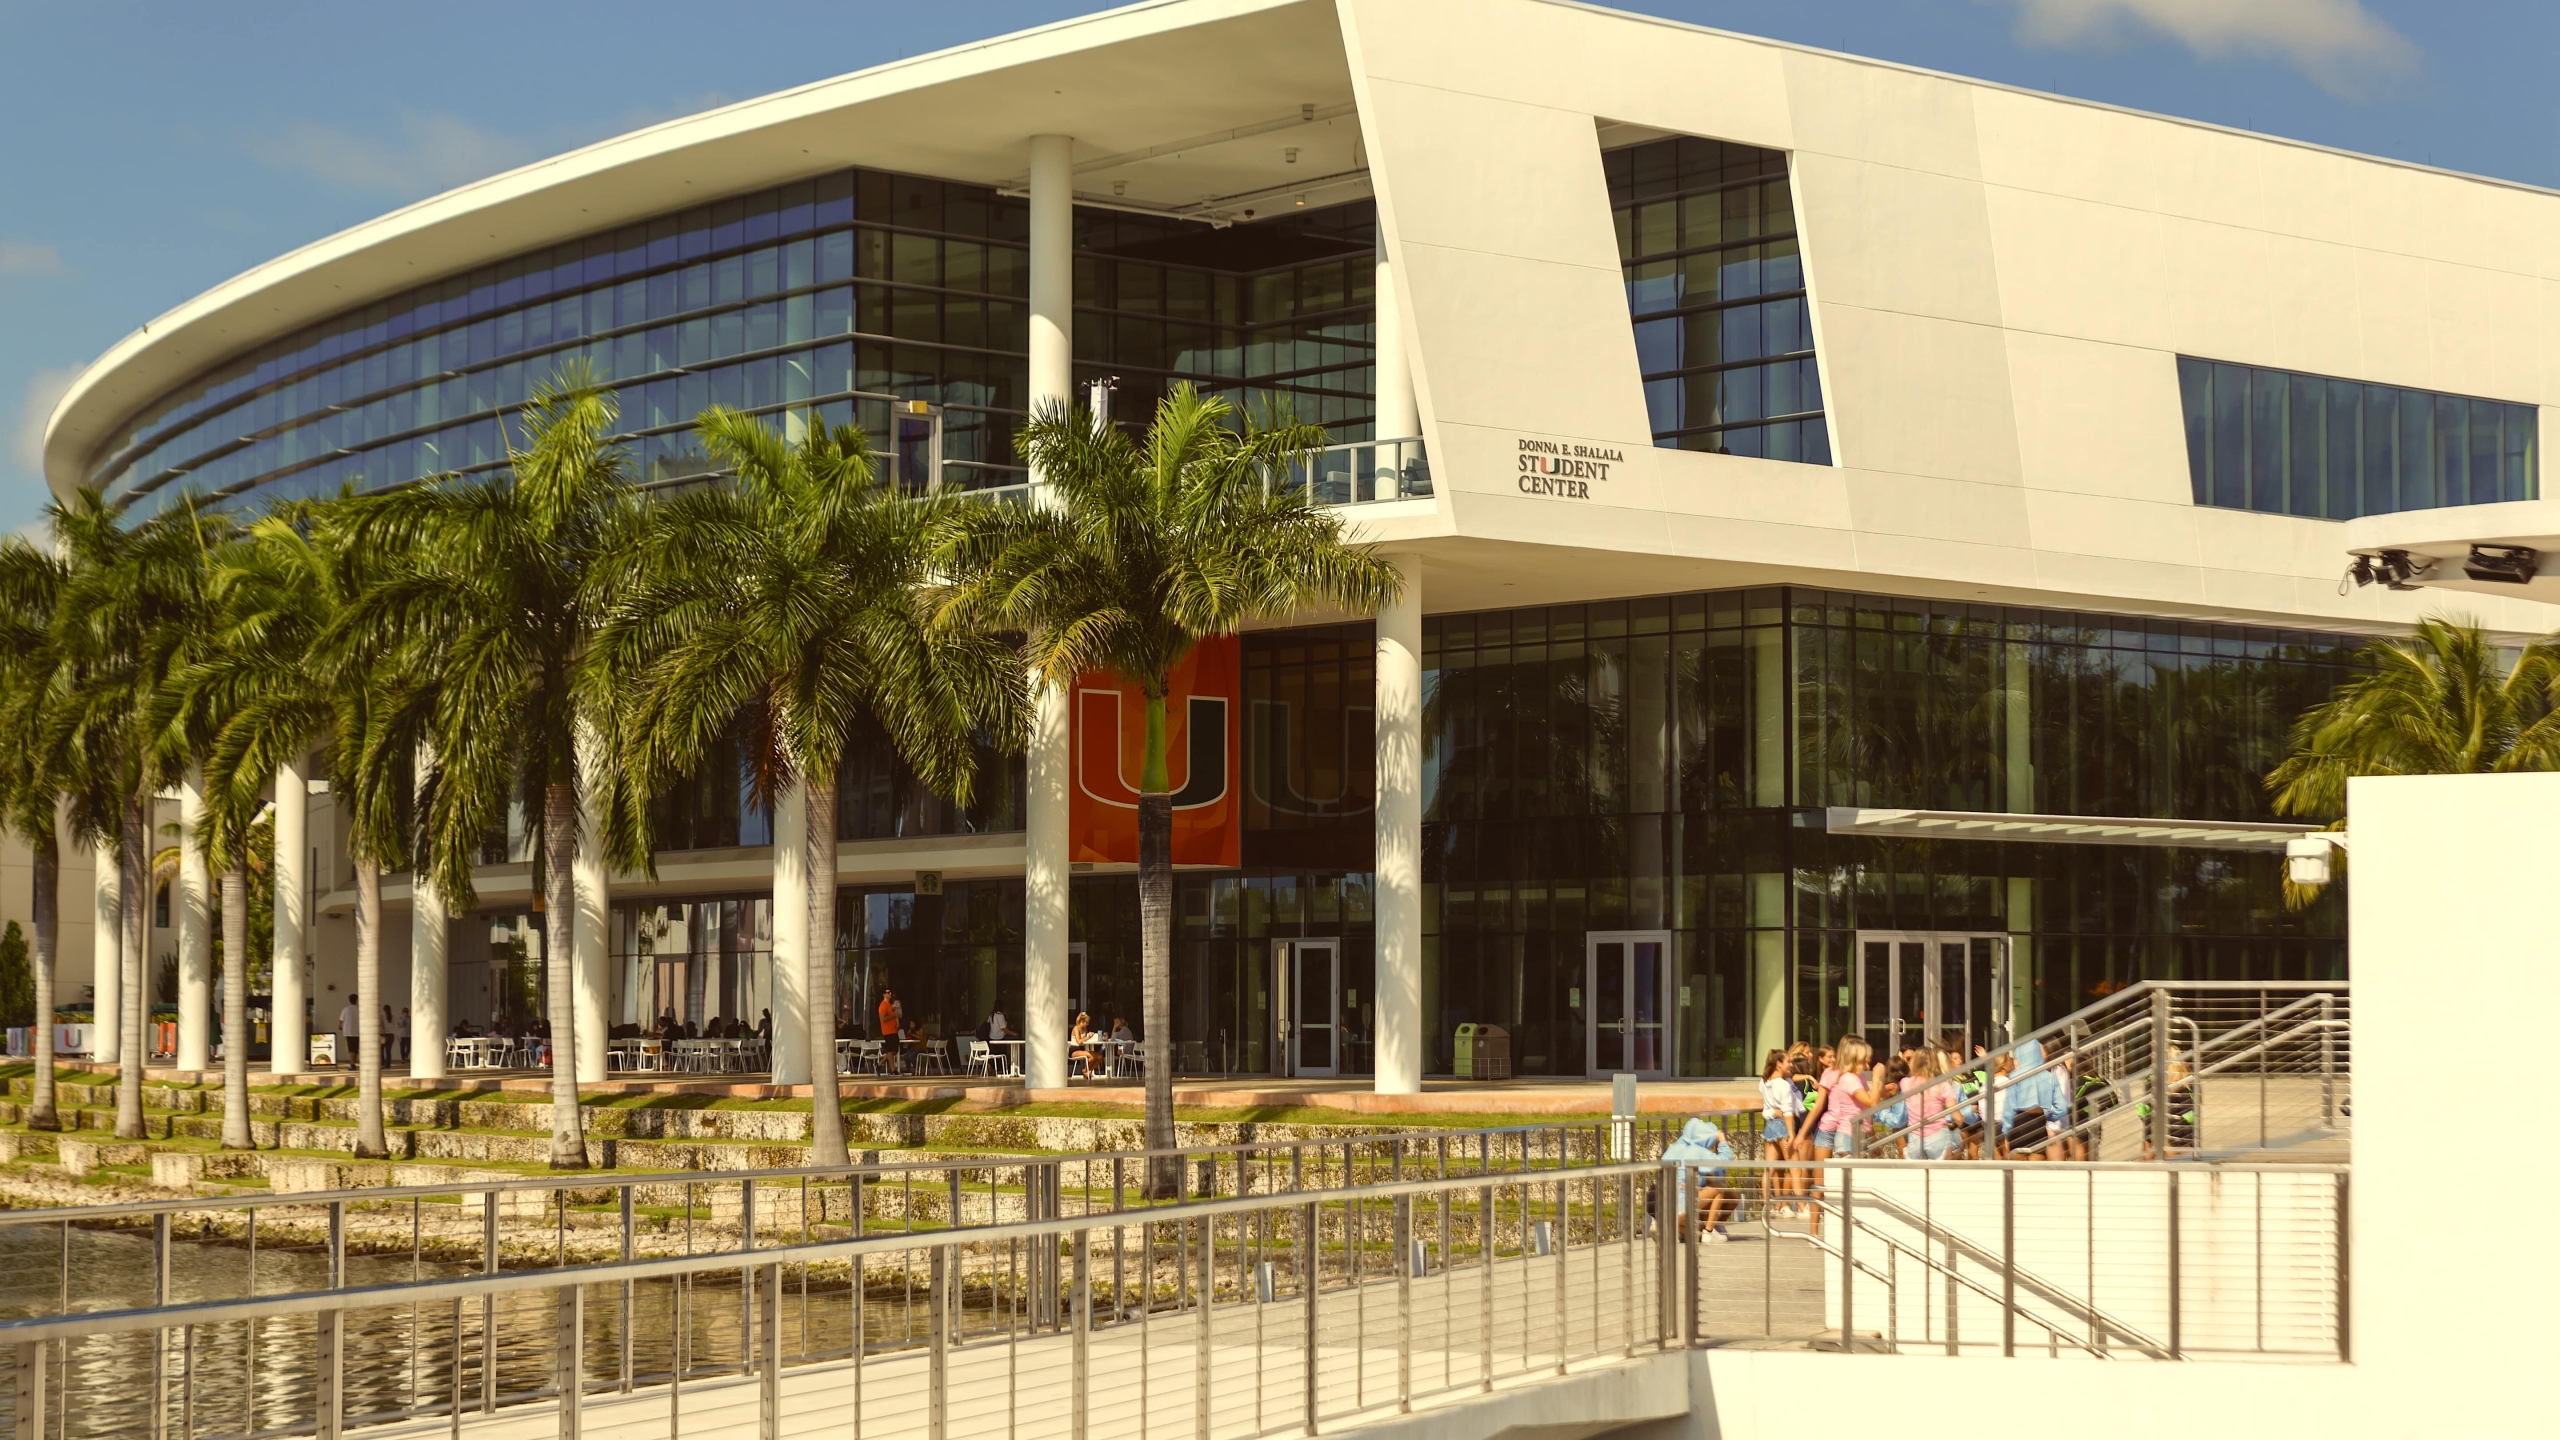 University of Miami Student Center